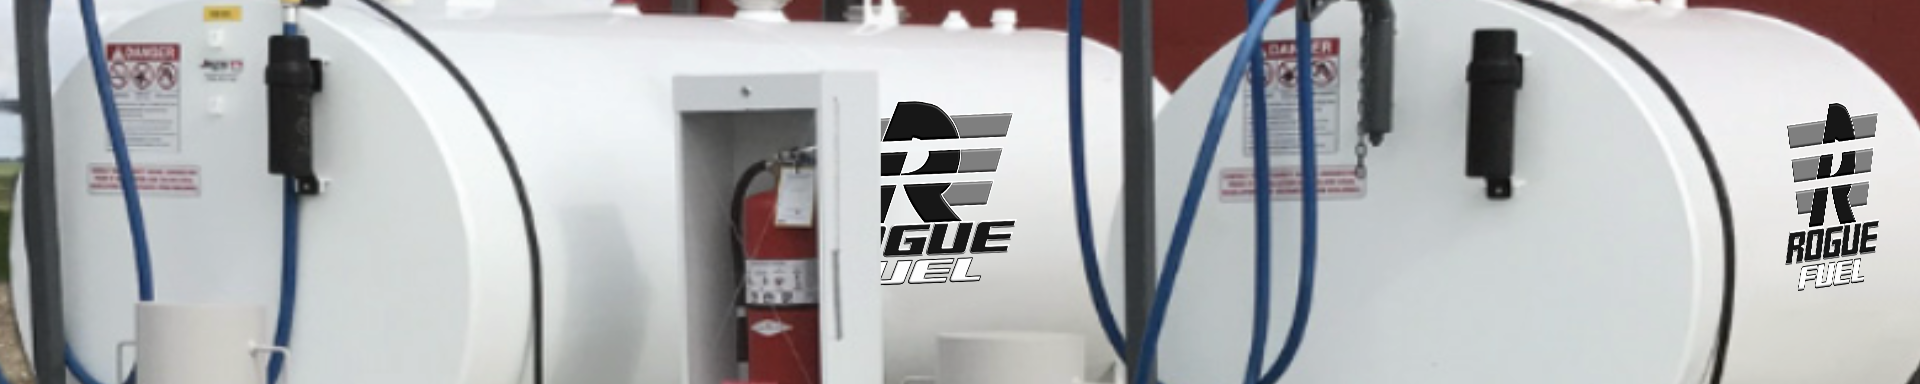 Utility Fuel Tanks & Accessories | RogueFuel.ca | Munro Industries rf-1007030601